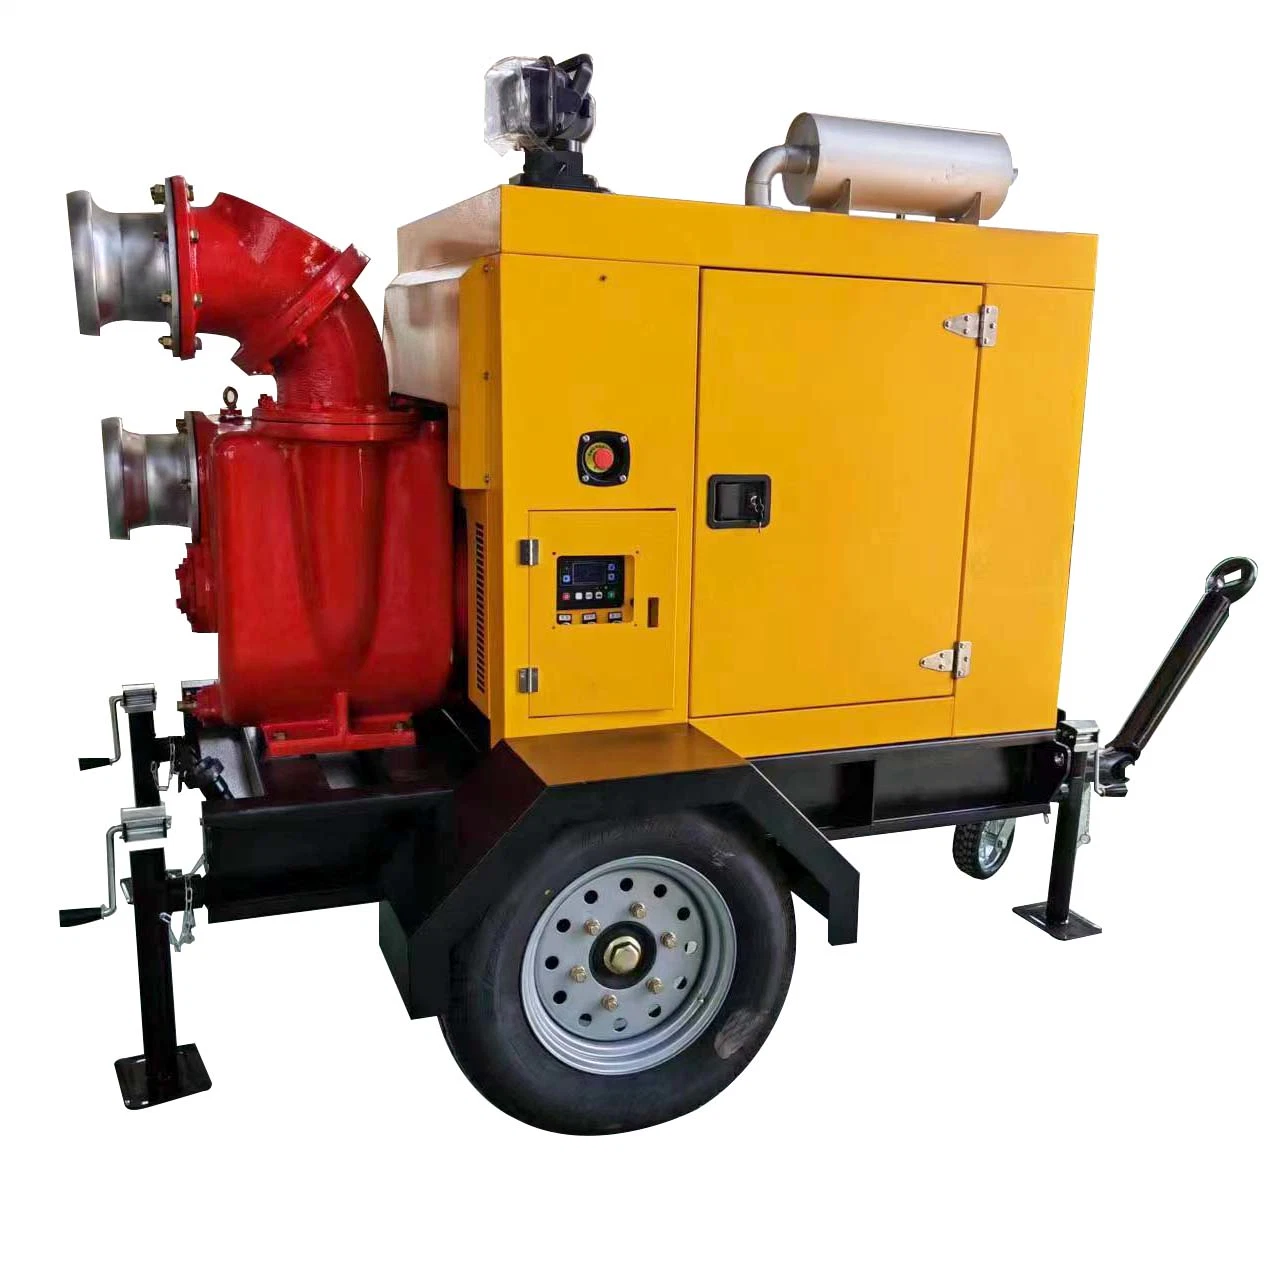 10 Inch Diesel Water Pump, Trash Pump, Drainage Pump, Fire-Fighting Pump, Irrigation Pump, Self-Priming Diesel Engine Centrifugal Pump, Flood Control Pump,